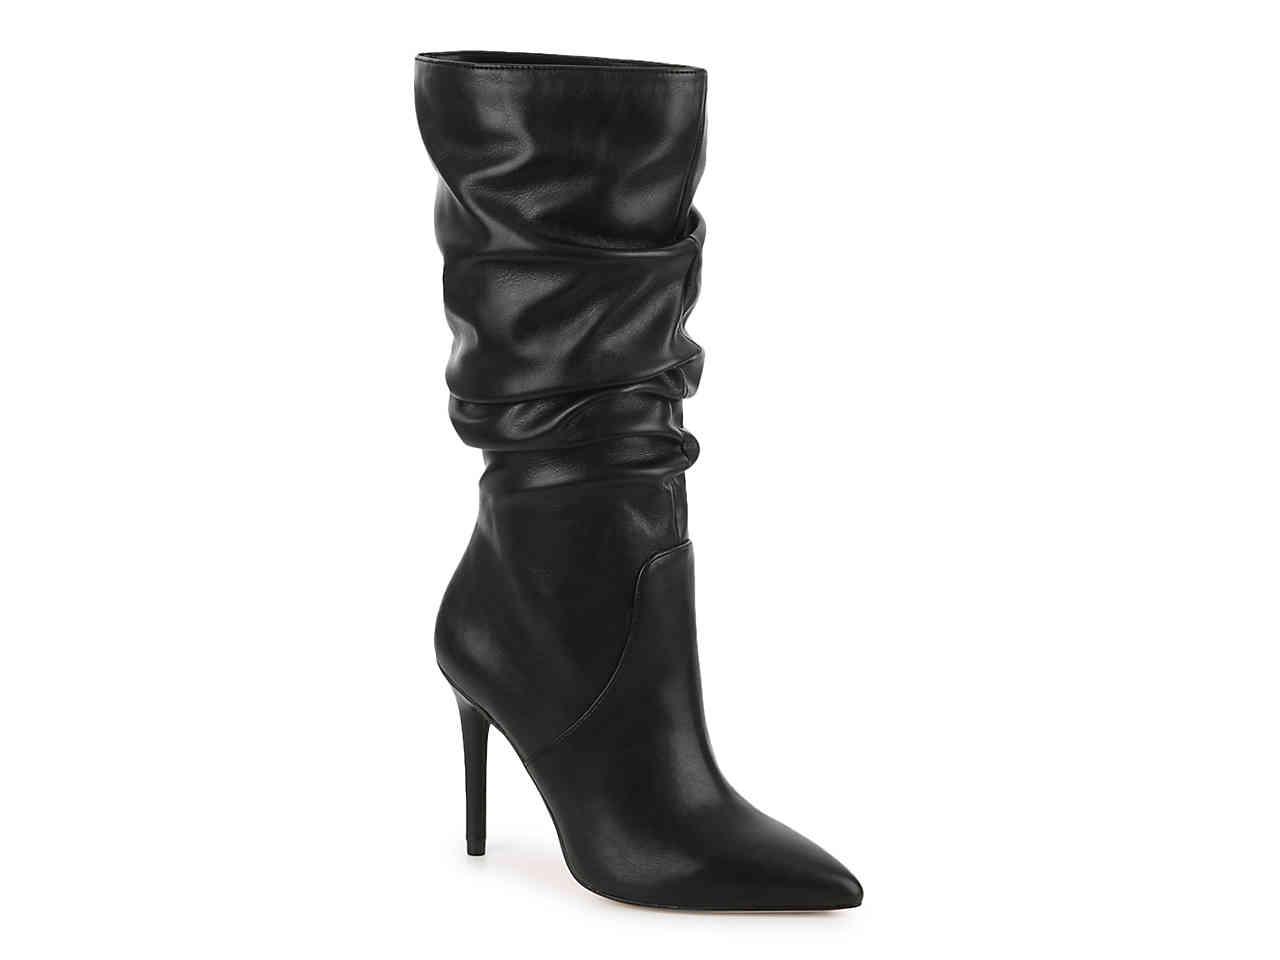 Jessica Simpson Saffrina Boot in Black - Save 54% - Lyst1280 x 960